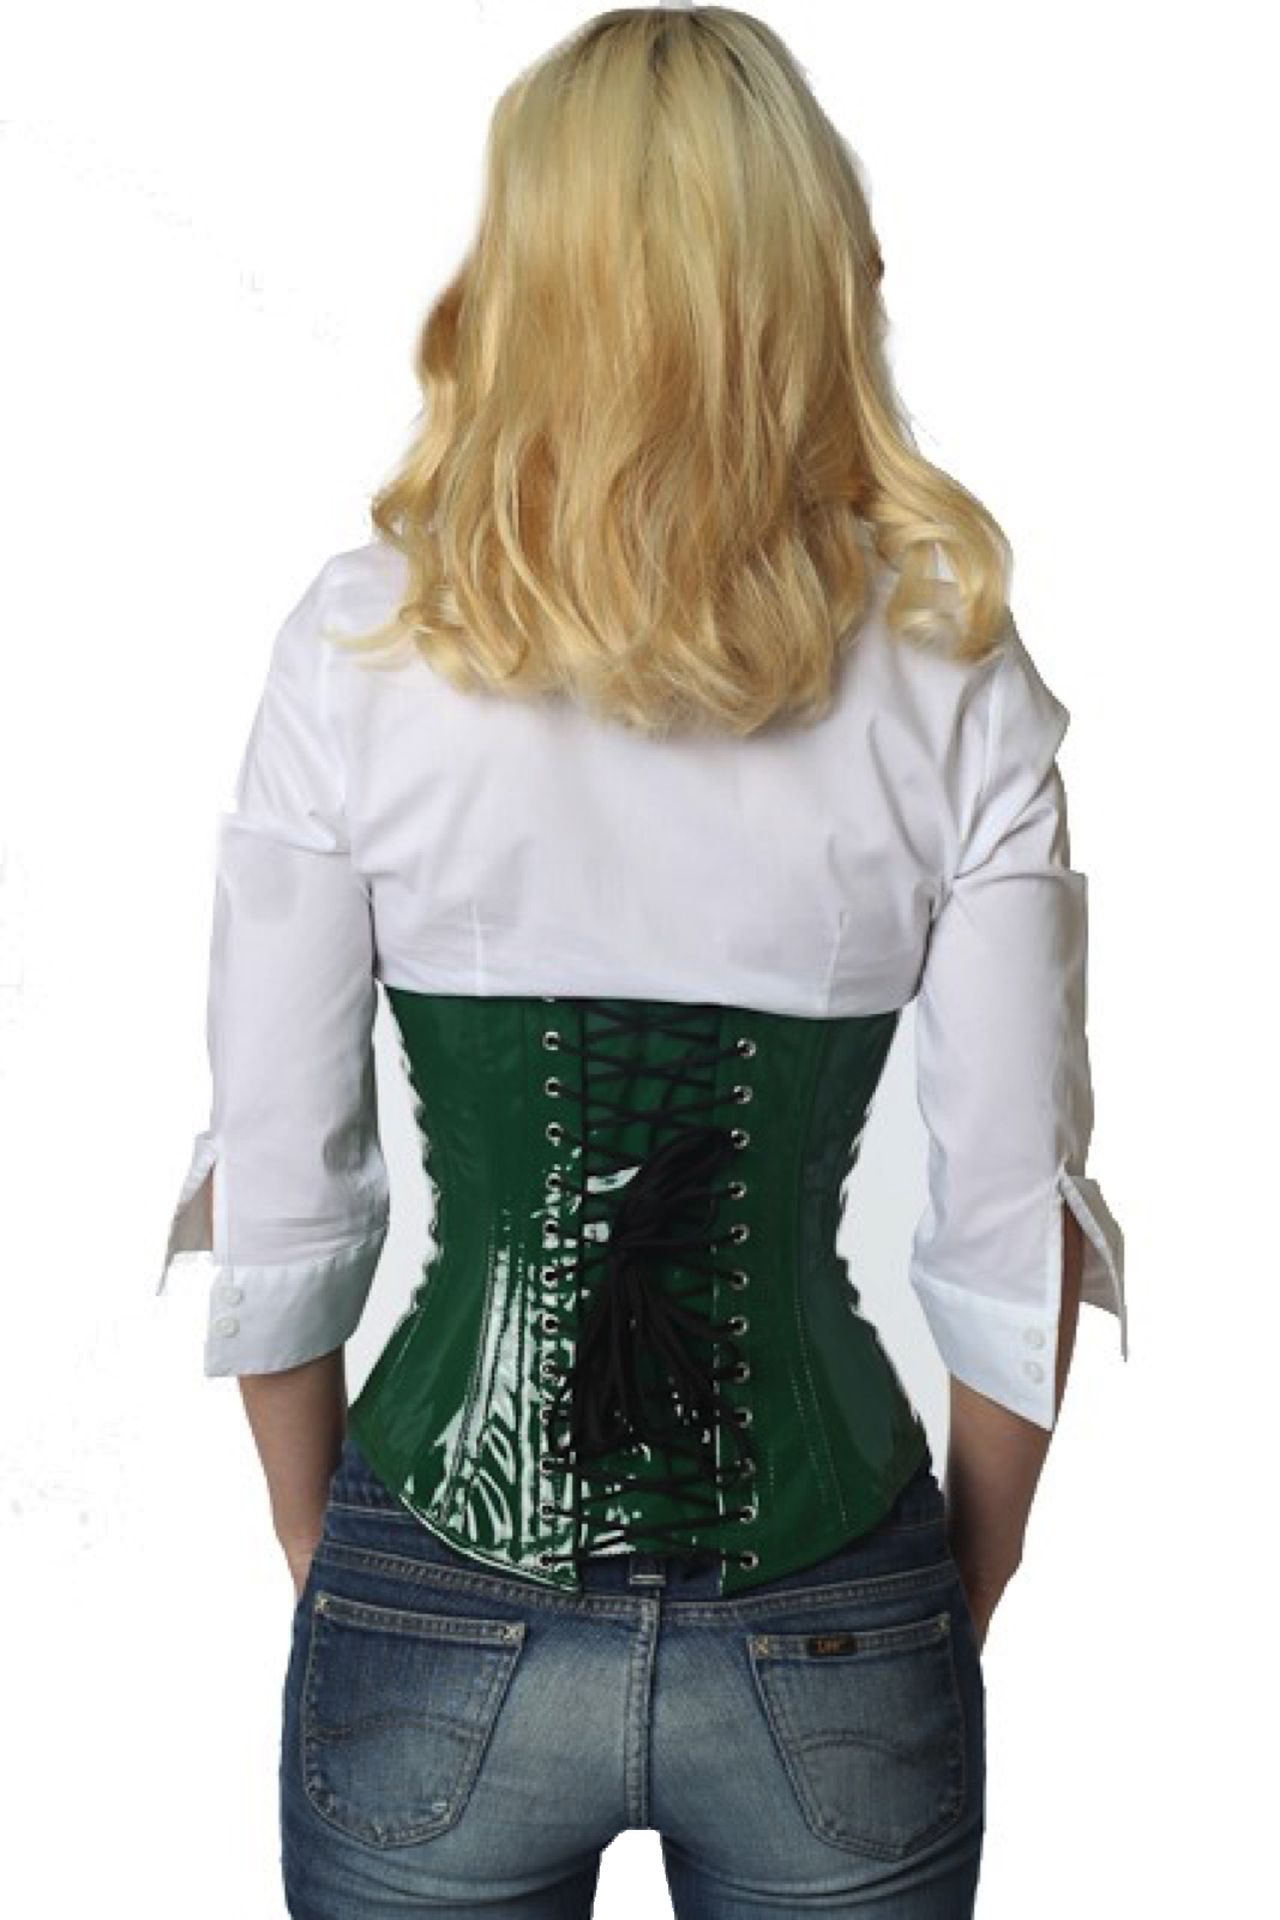 Lak corset groen onderborst Korset pu72